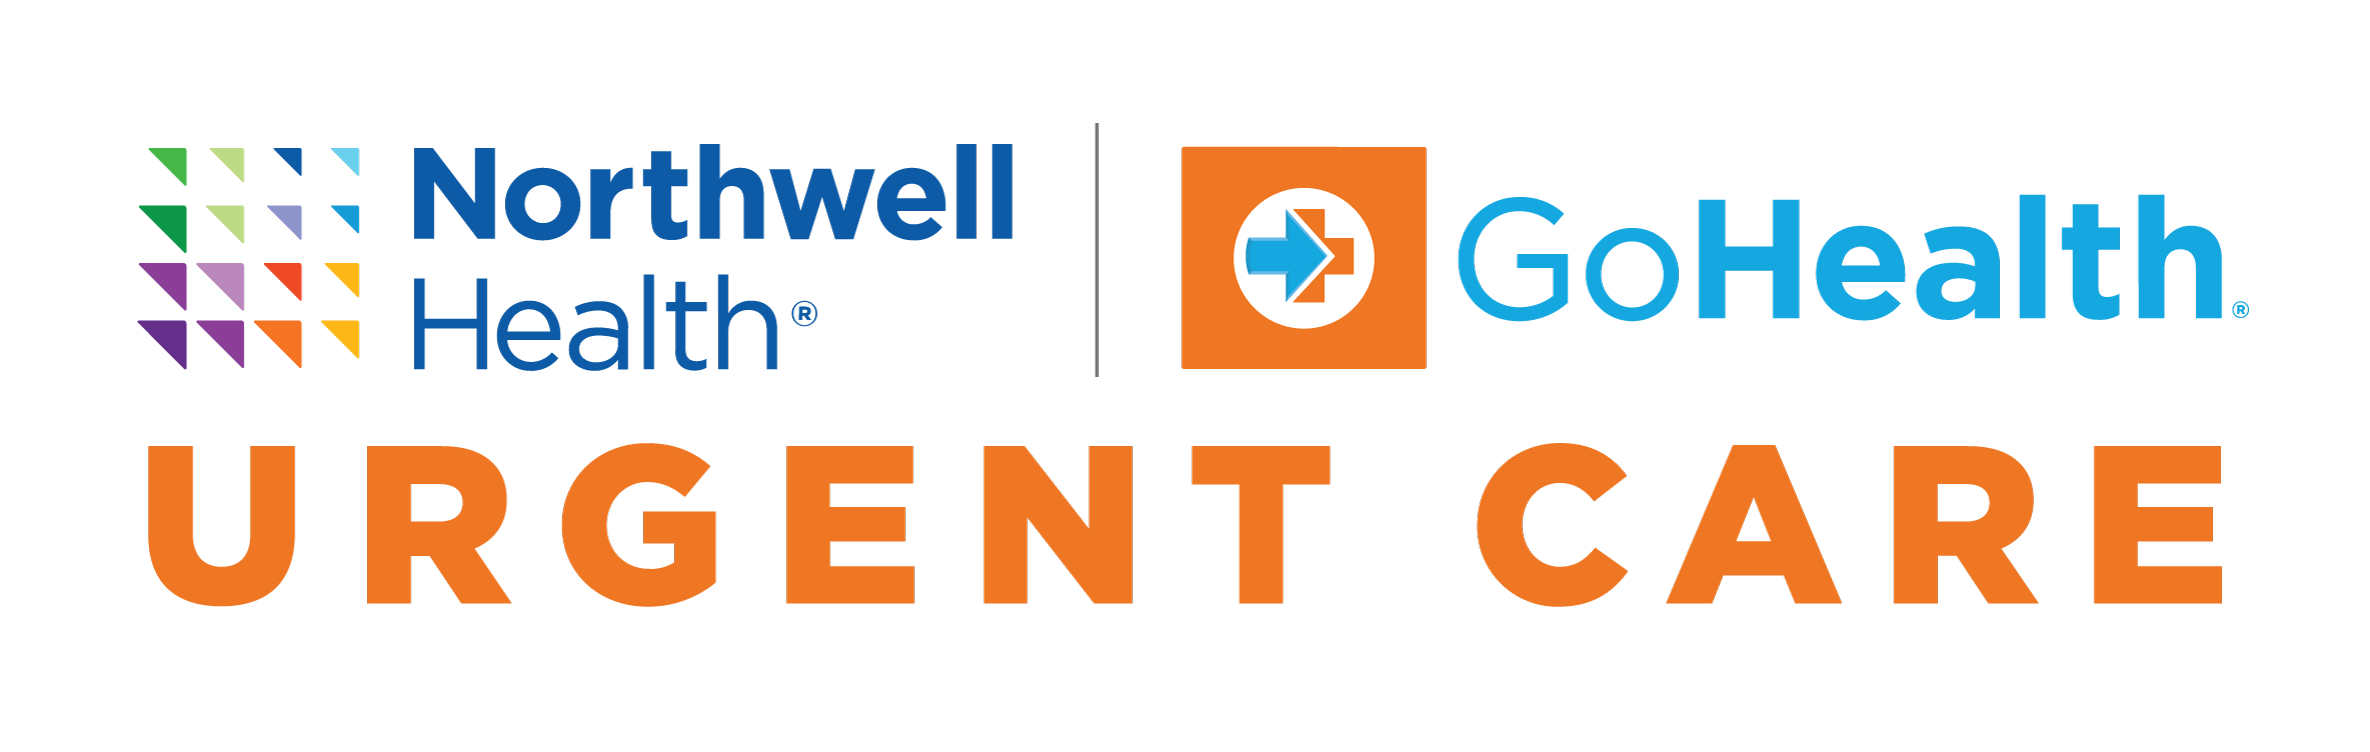 northwell health | go Health urgent care